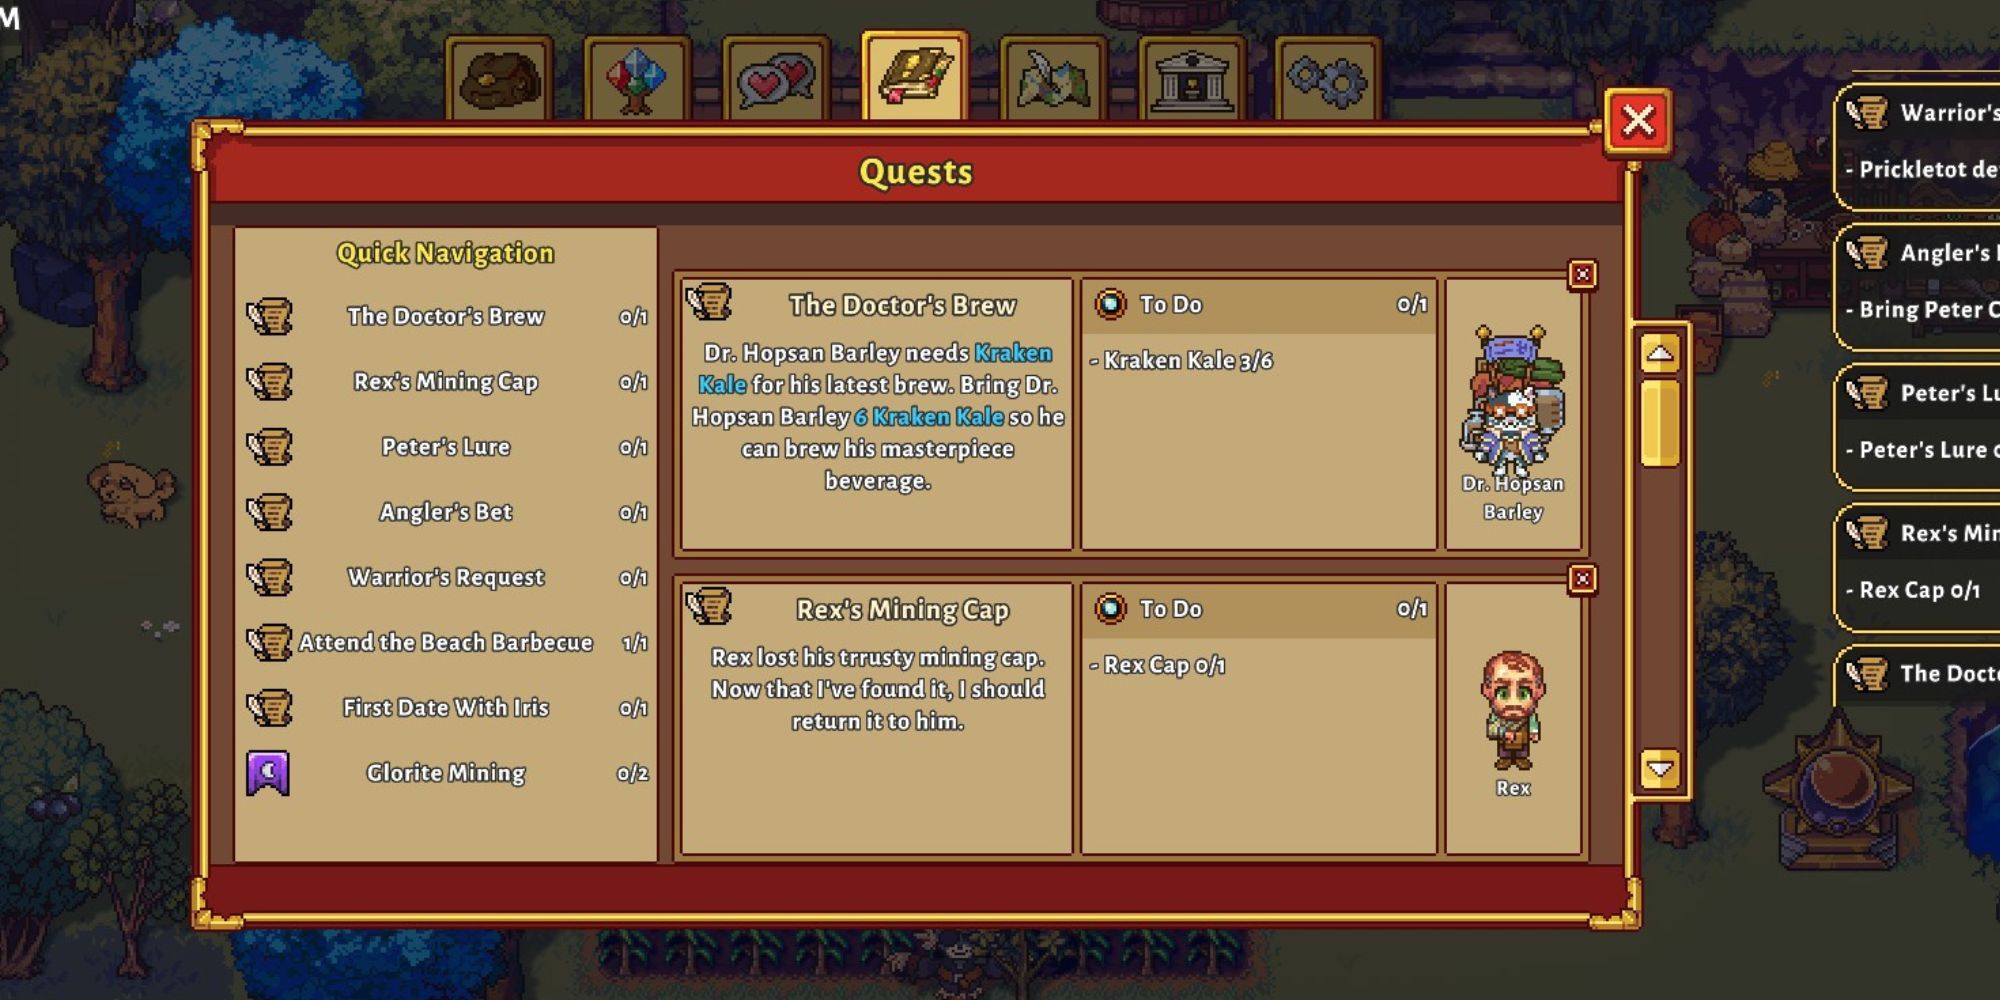 Quest menu showing quick navigation and quests 